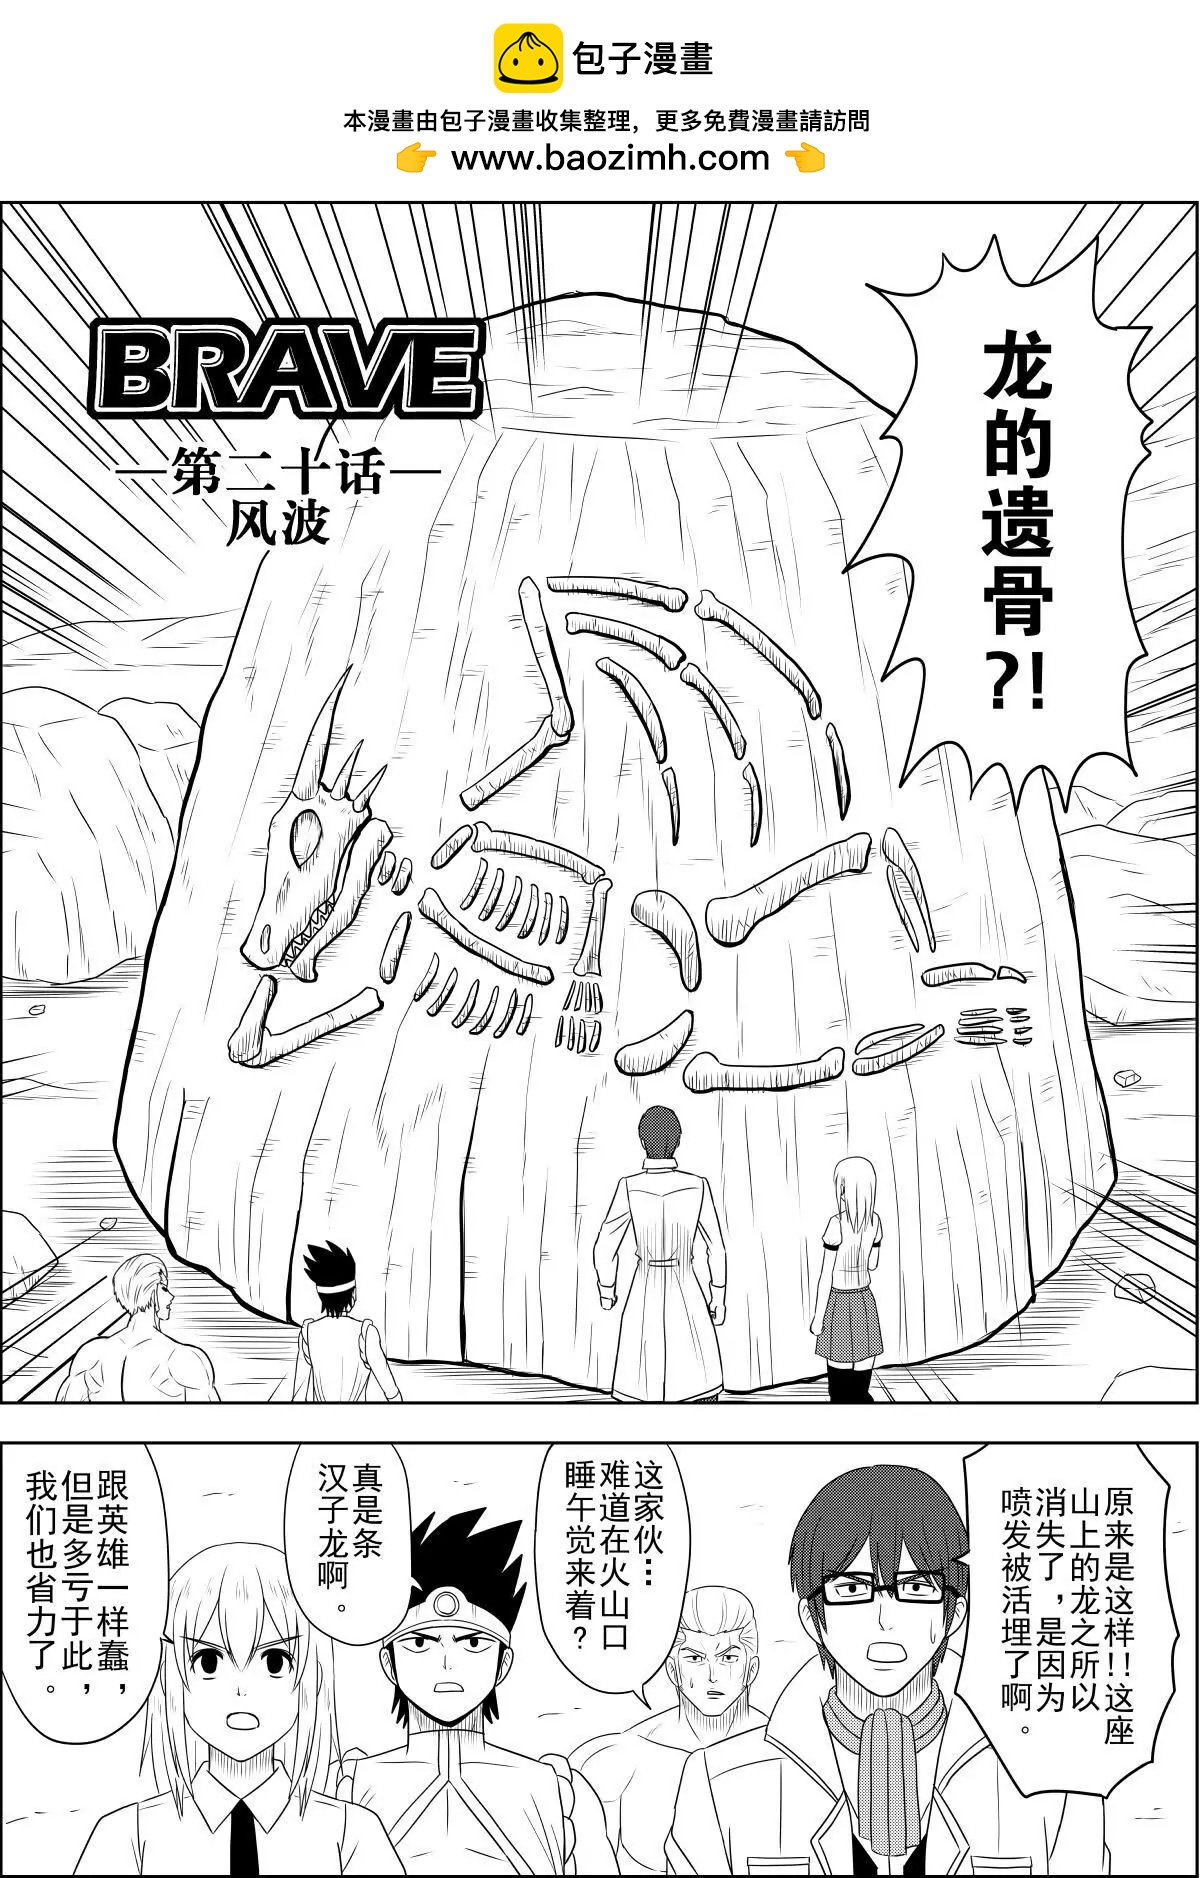 Brave - 第20话上 - 2